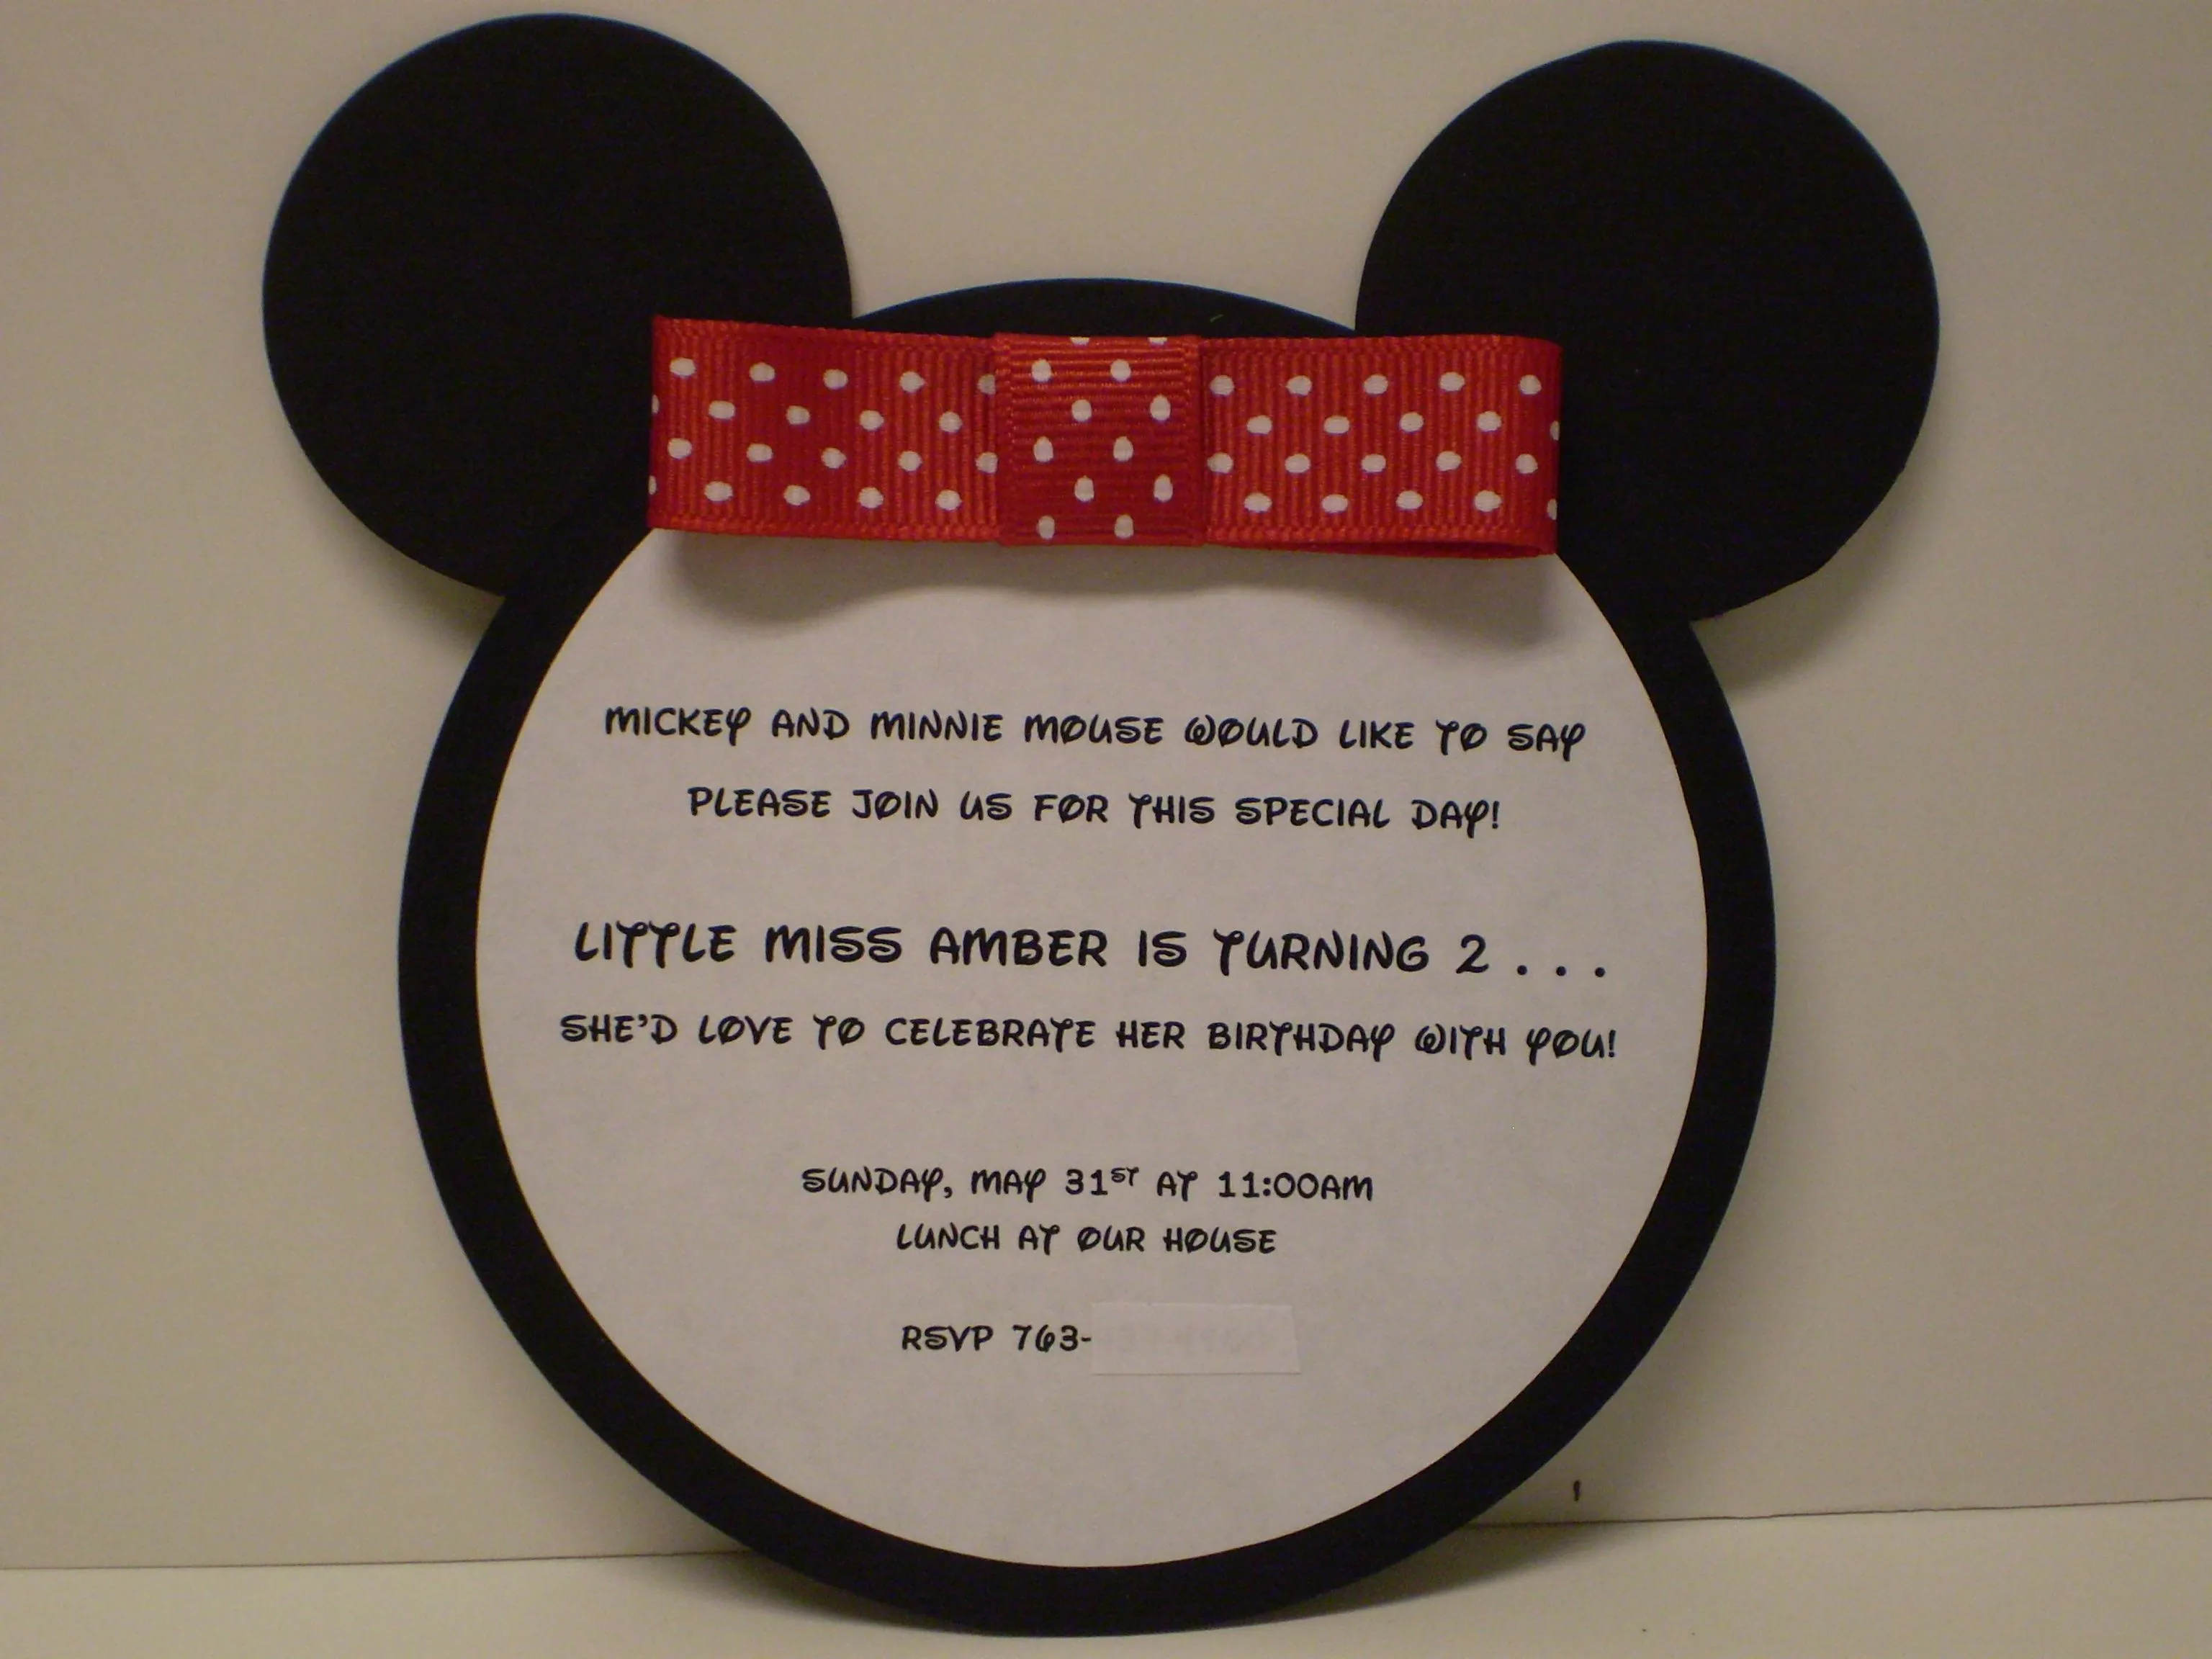 Invitacion Mickey-Minnie Mouse.JPG